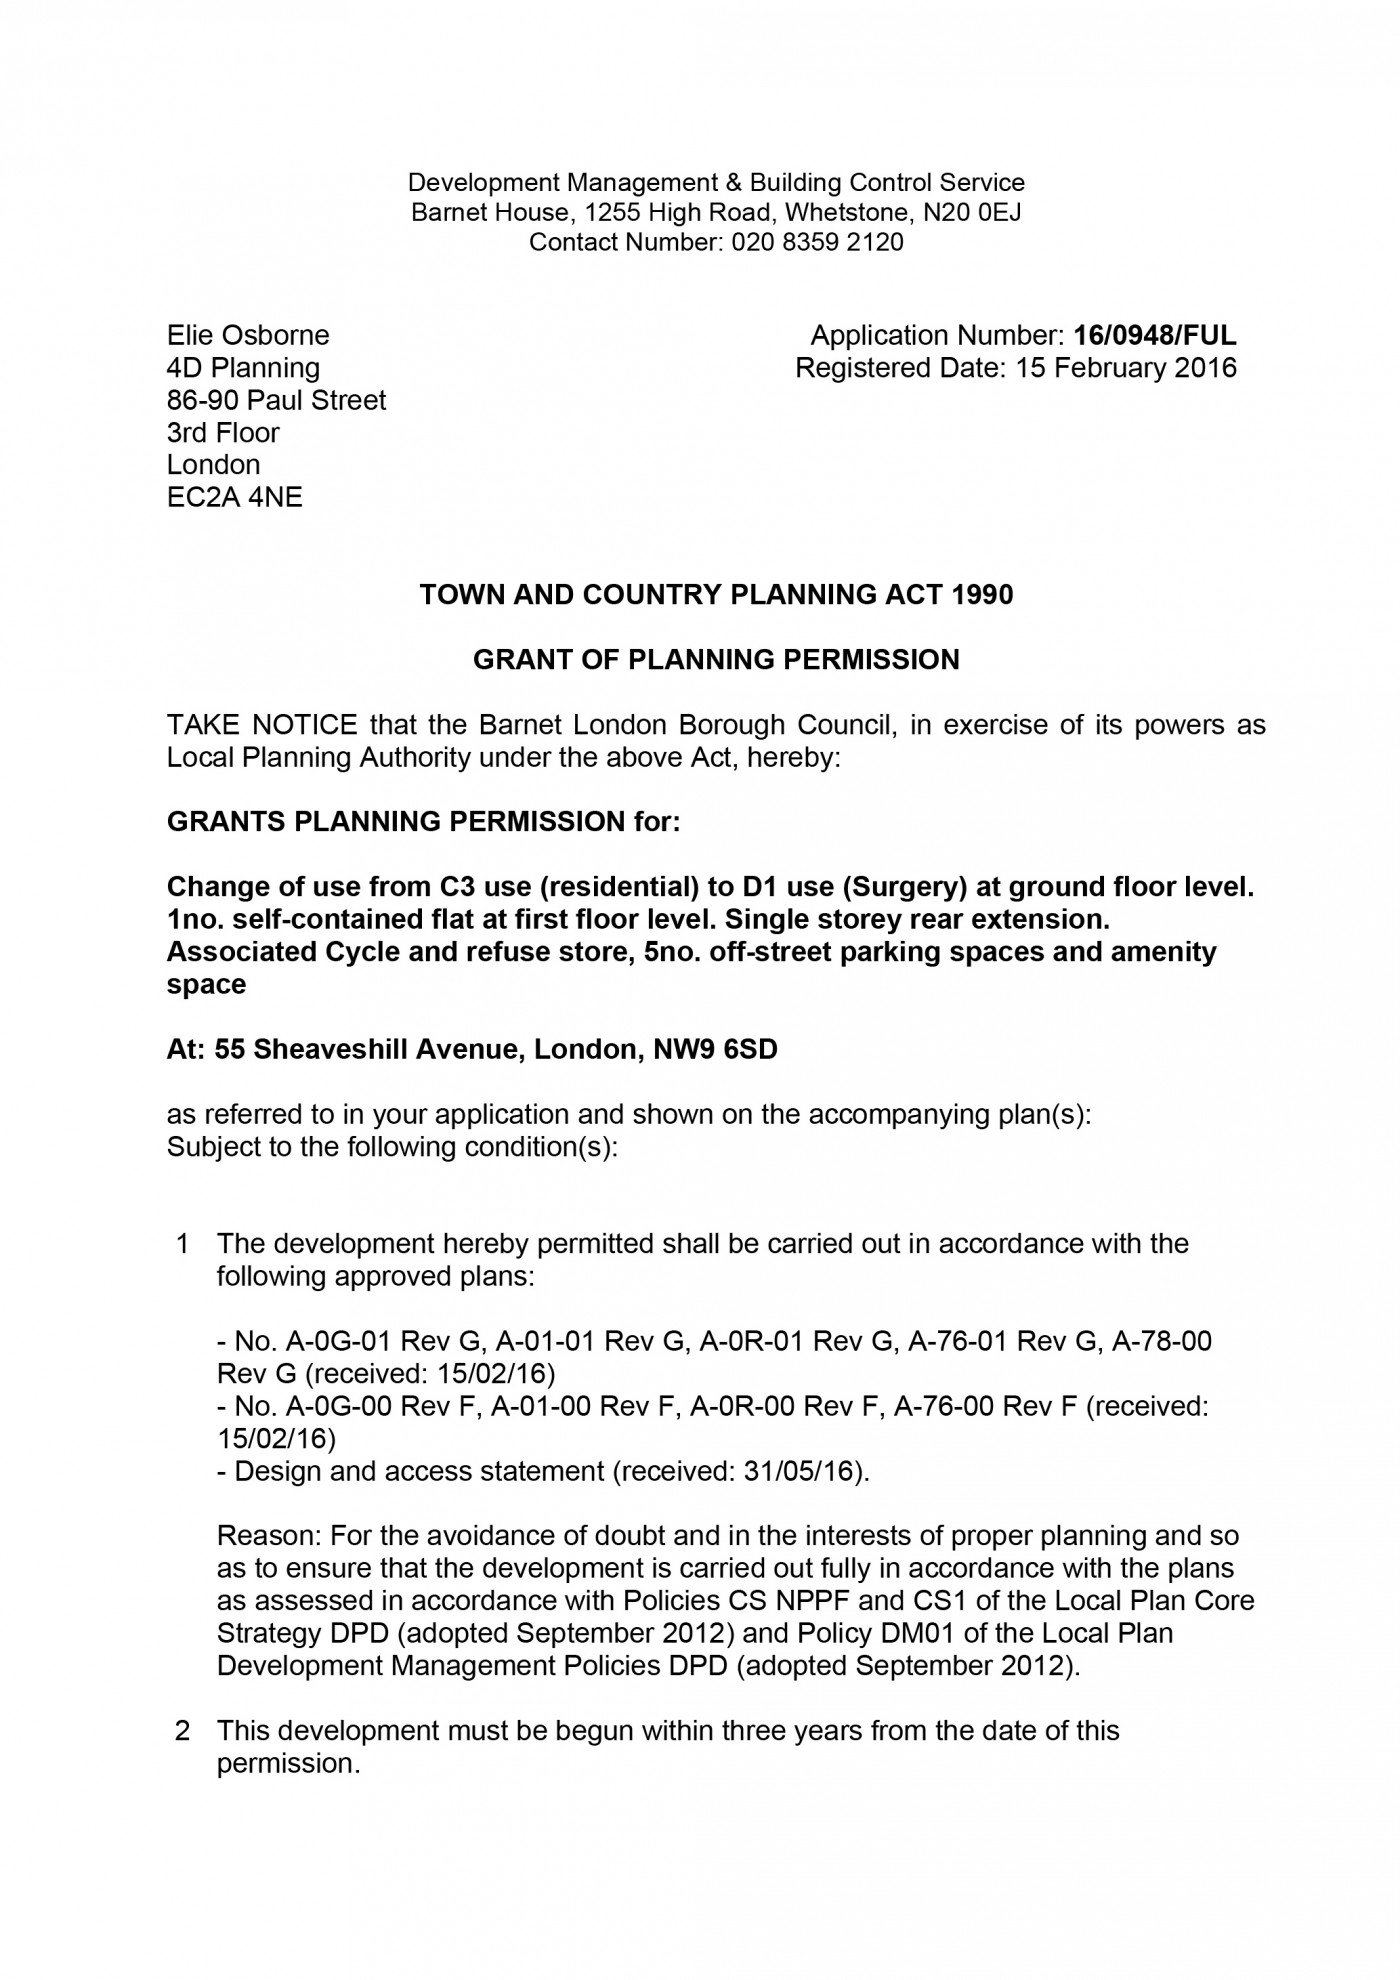 Barnet Council Decision Notice - Granted Planning Permission